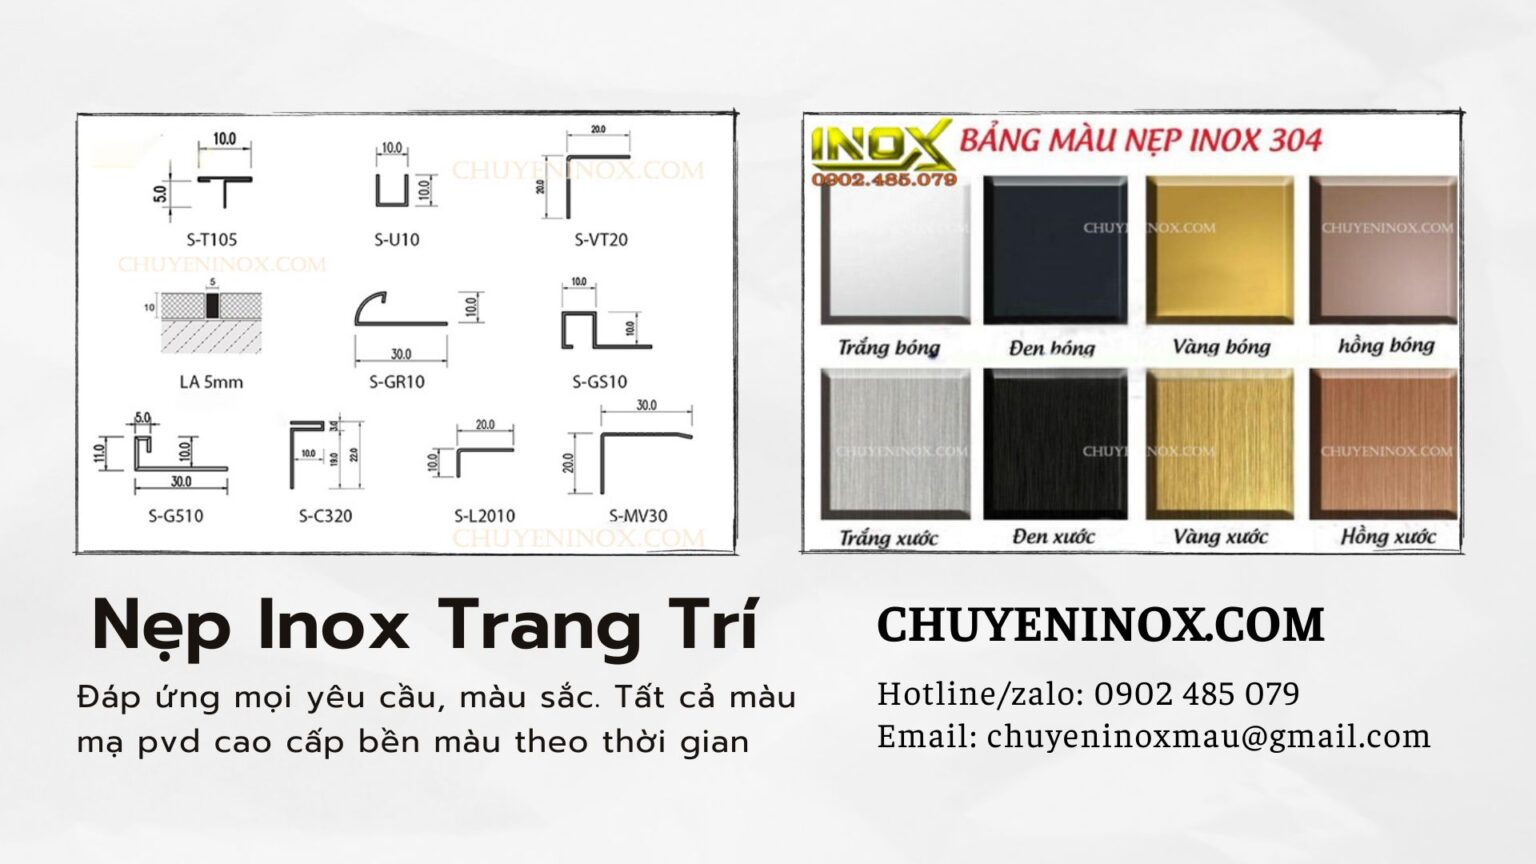 gia-cong-nep-inox-trang-tri-1536x864.jpg